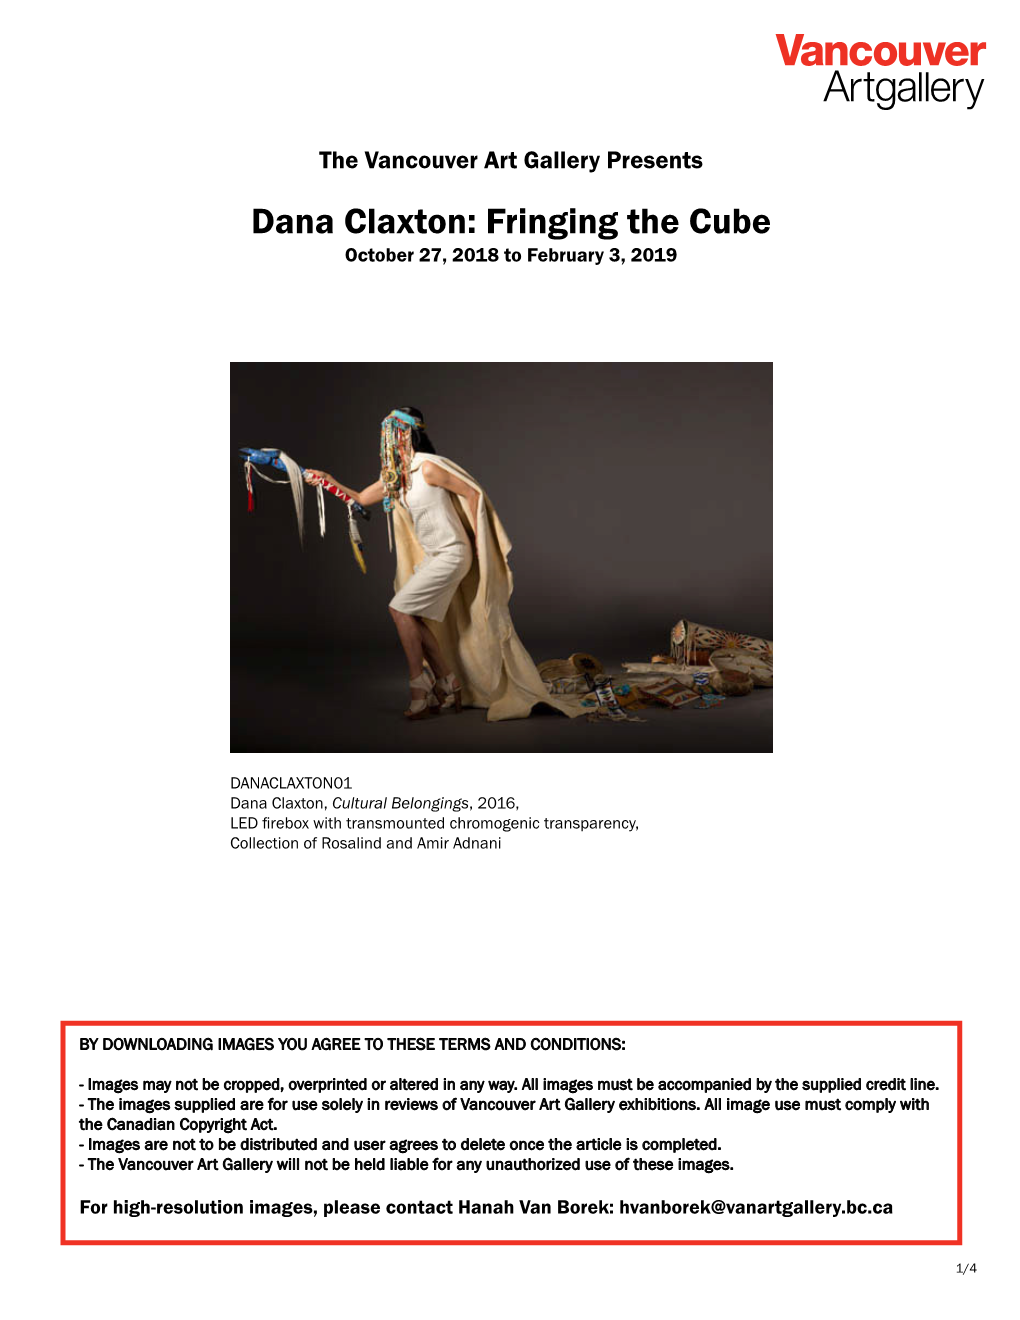 Dana Claxton: Fringing the Cube October 27, 2018 to February 3, 2019